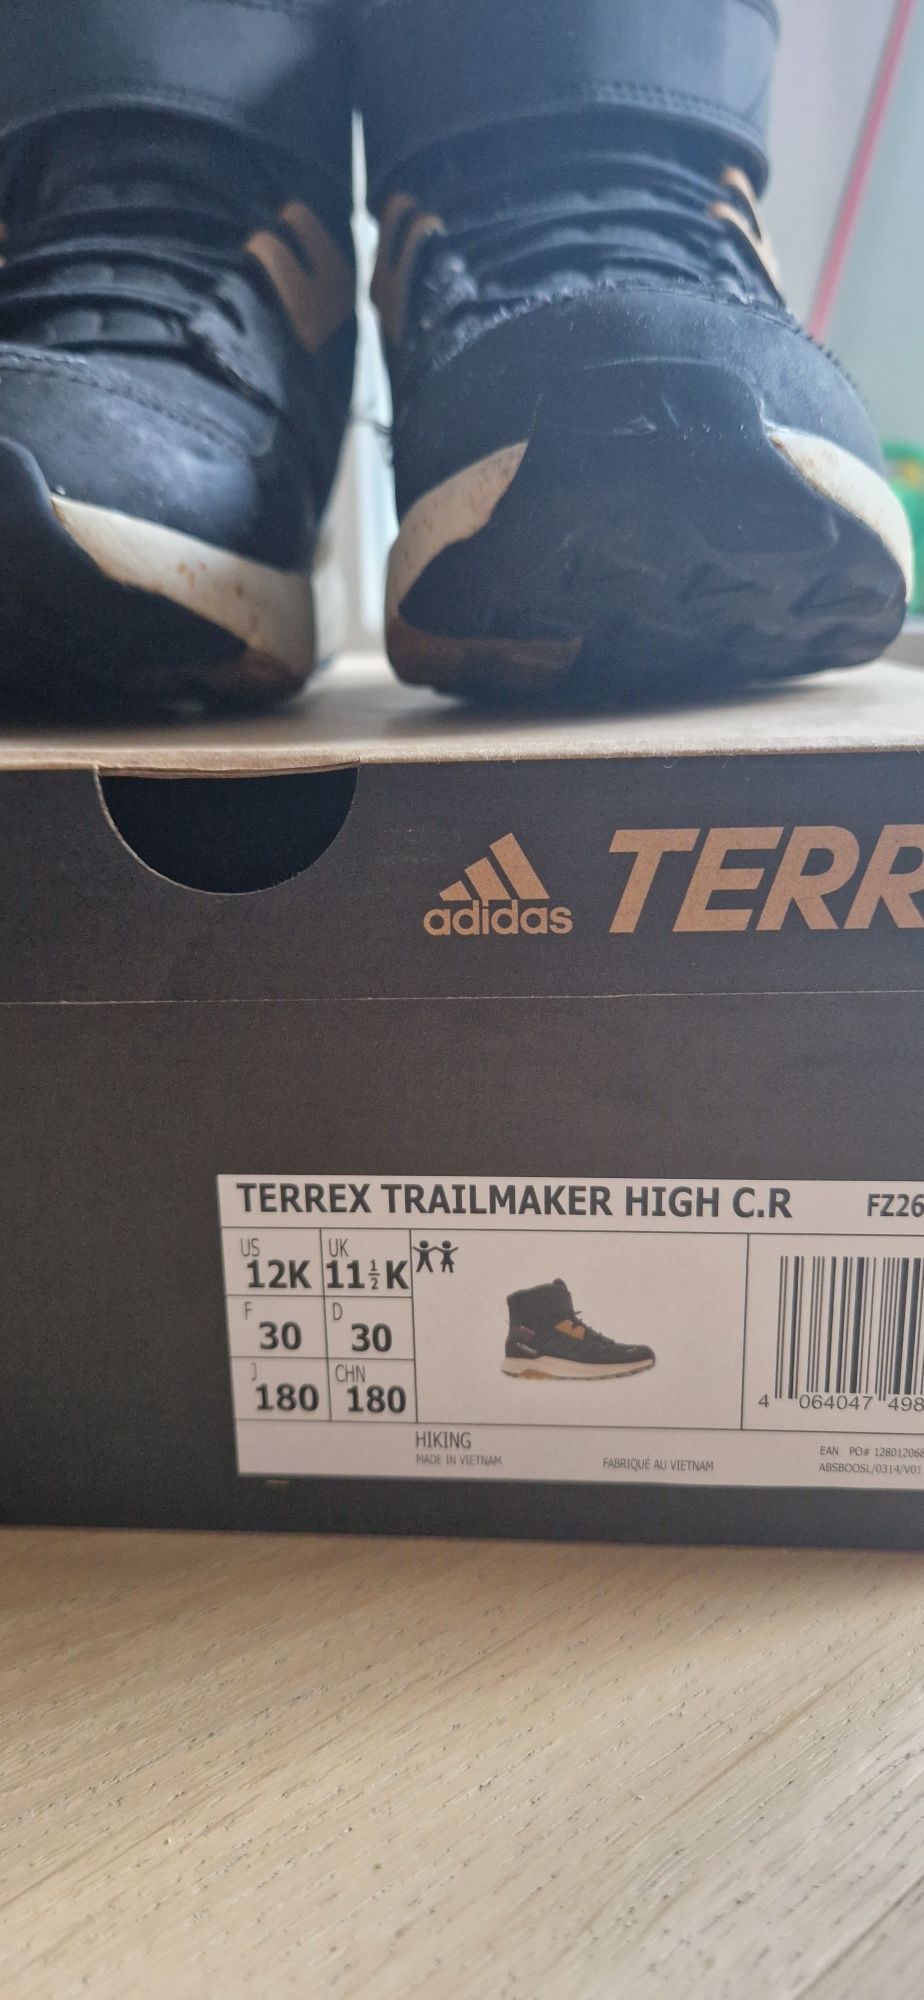 Adidas Terrex Trailmaker High C.R. roz 30